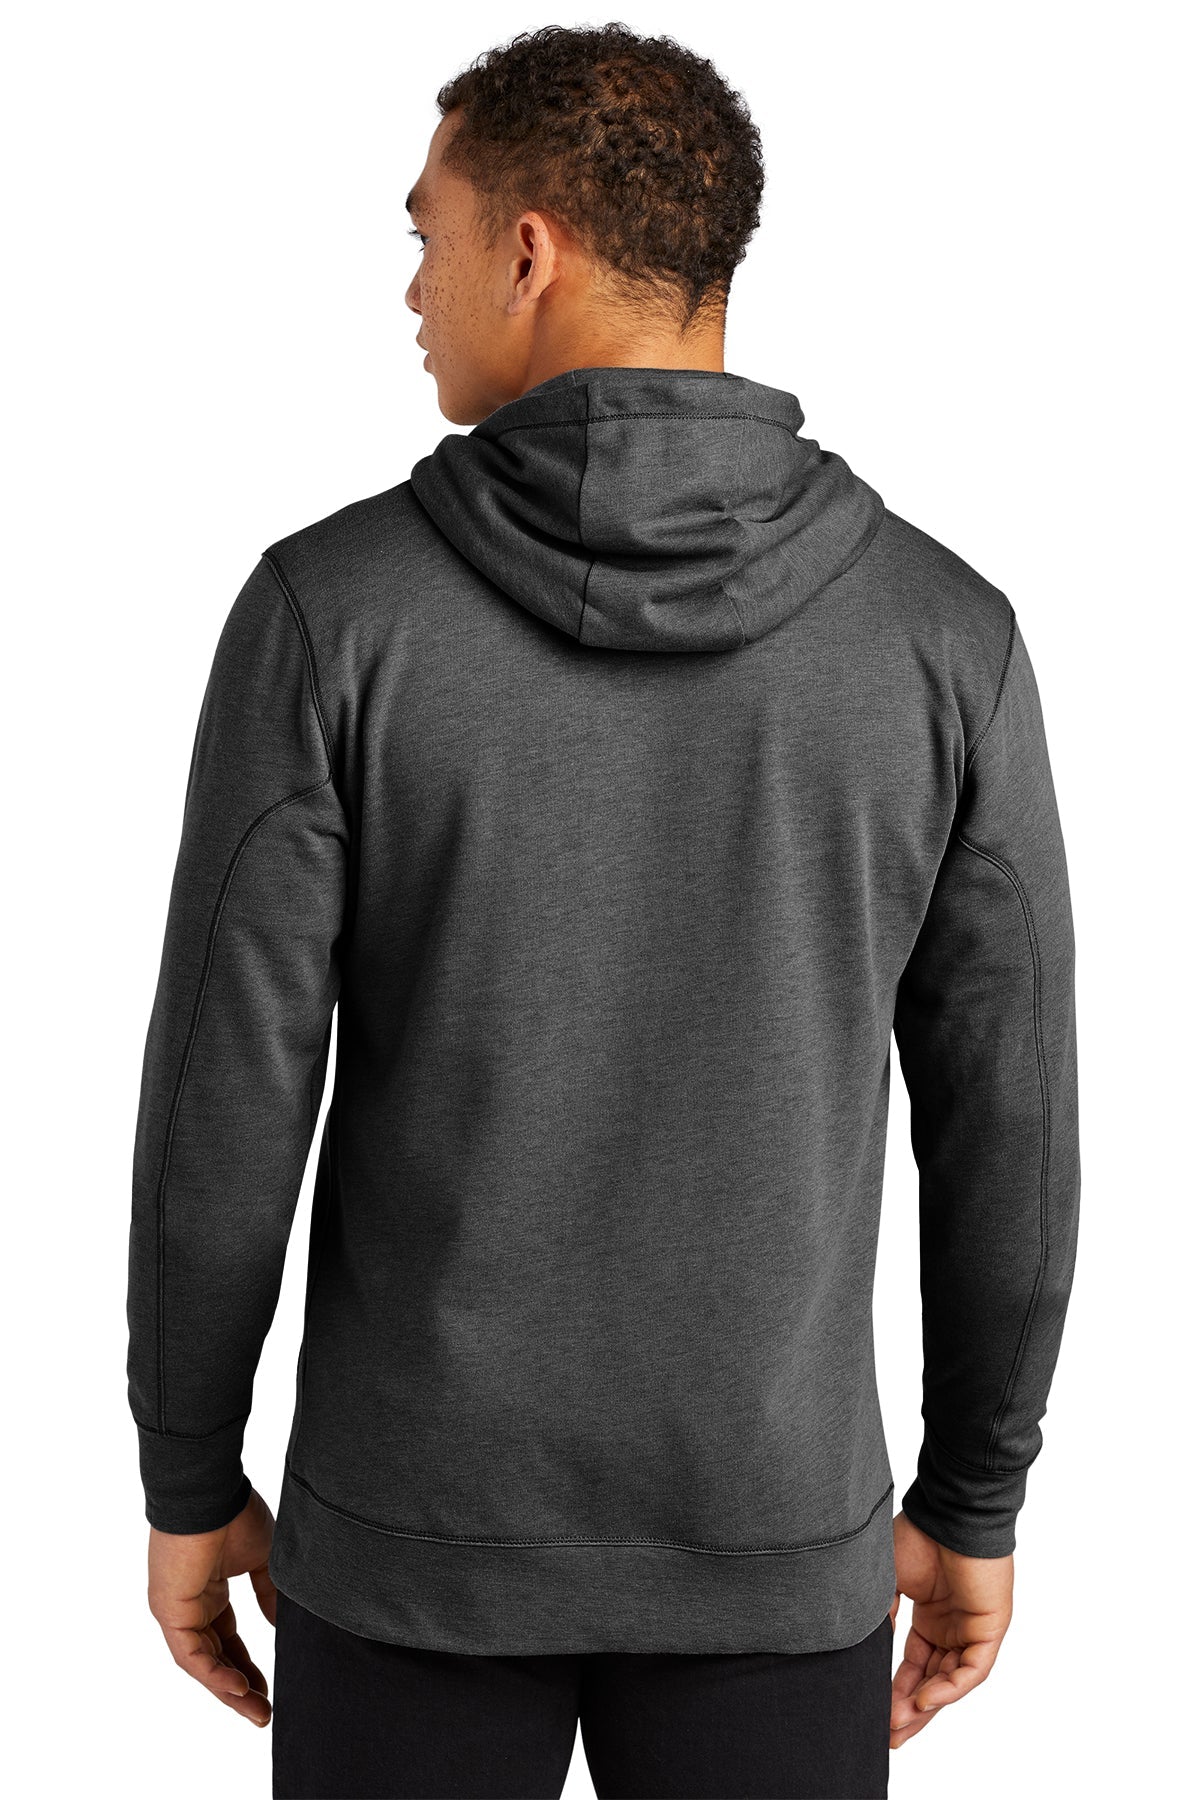 new era_nea511 _black heather_company_logo_sweatshirts